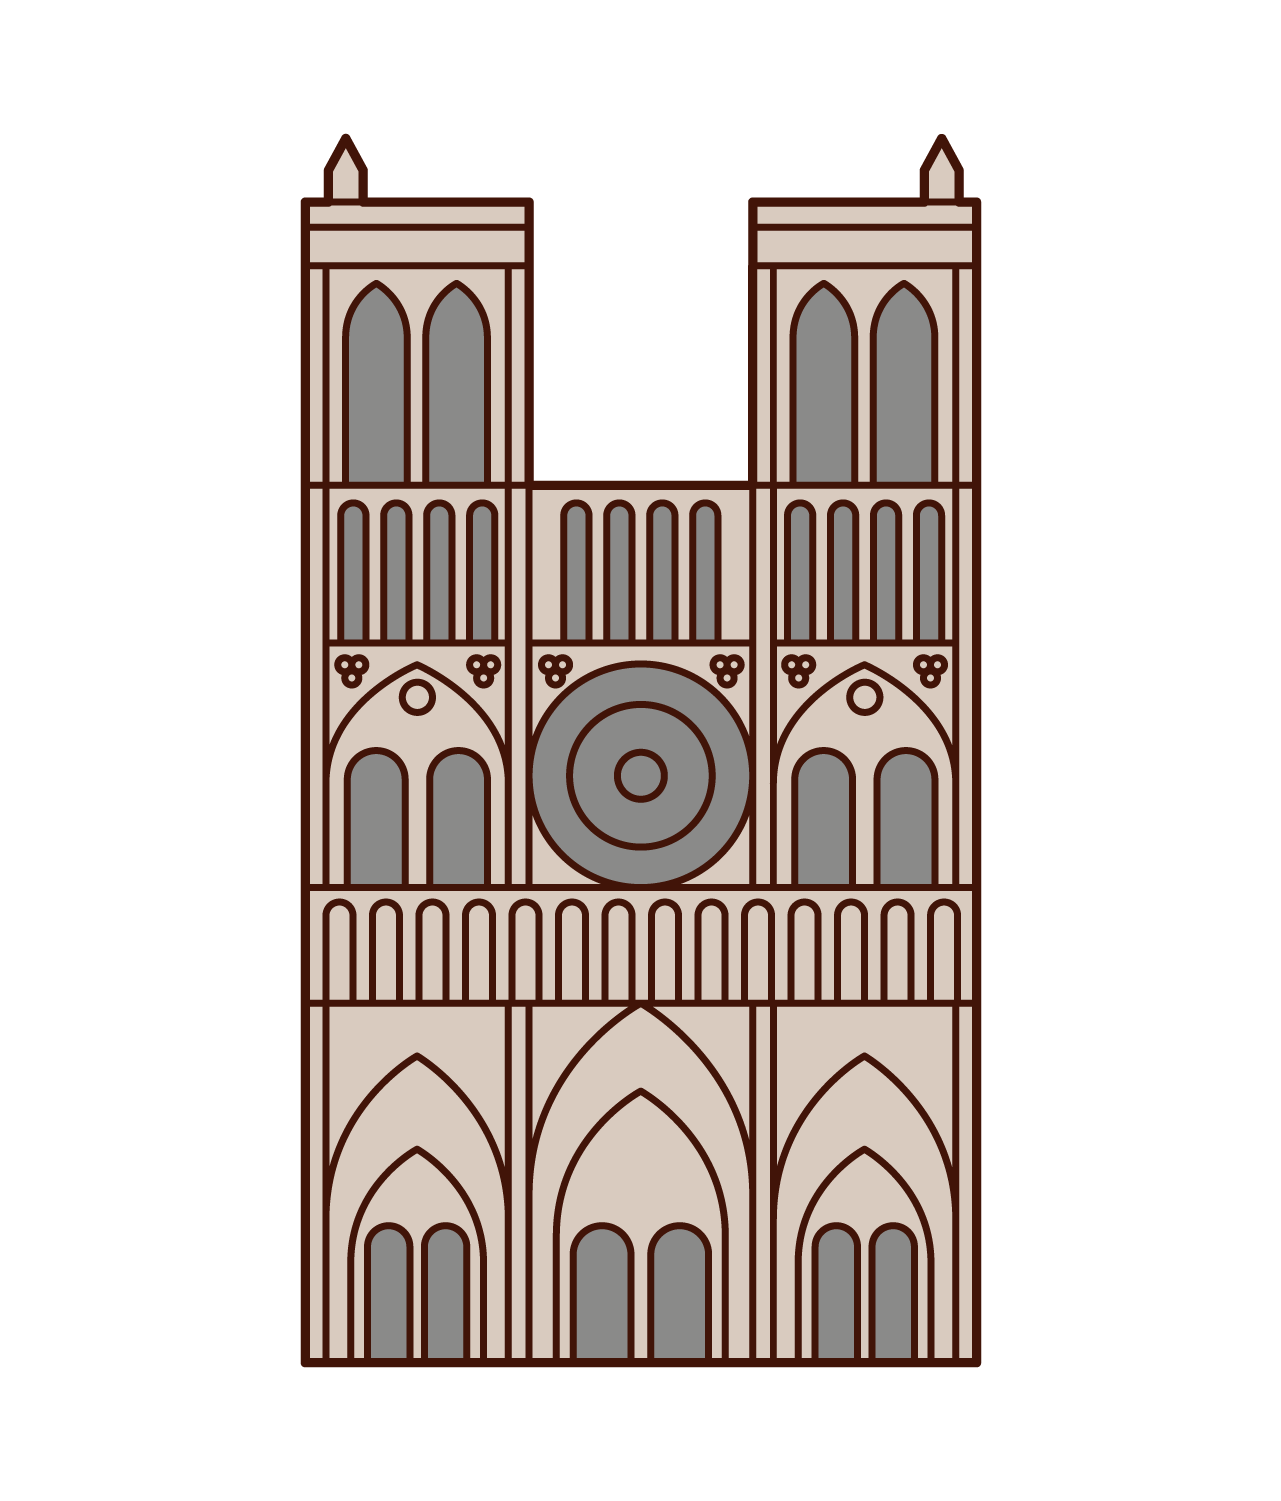 Illustration of Notre Dame Cathedral